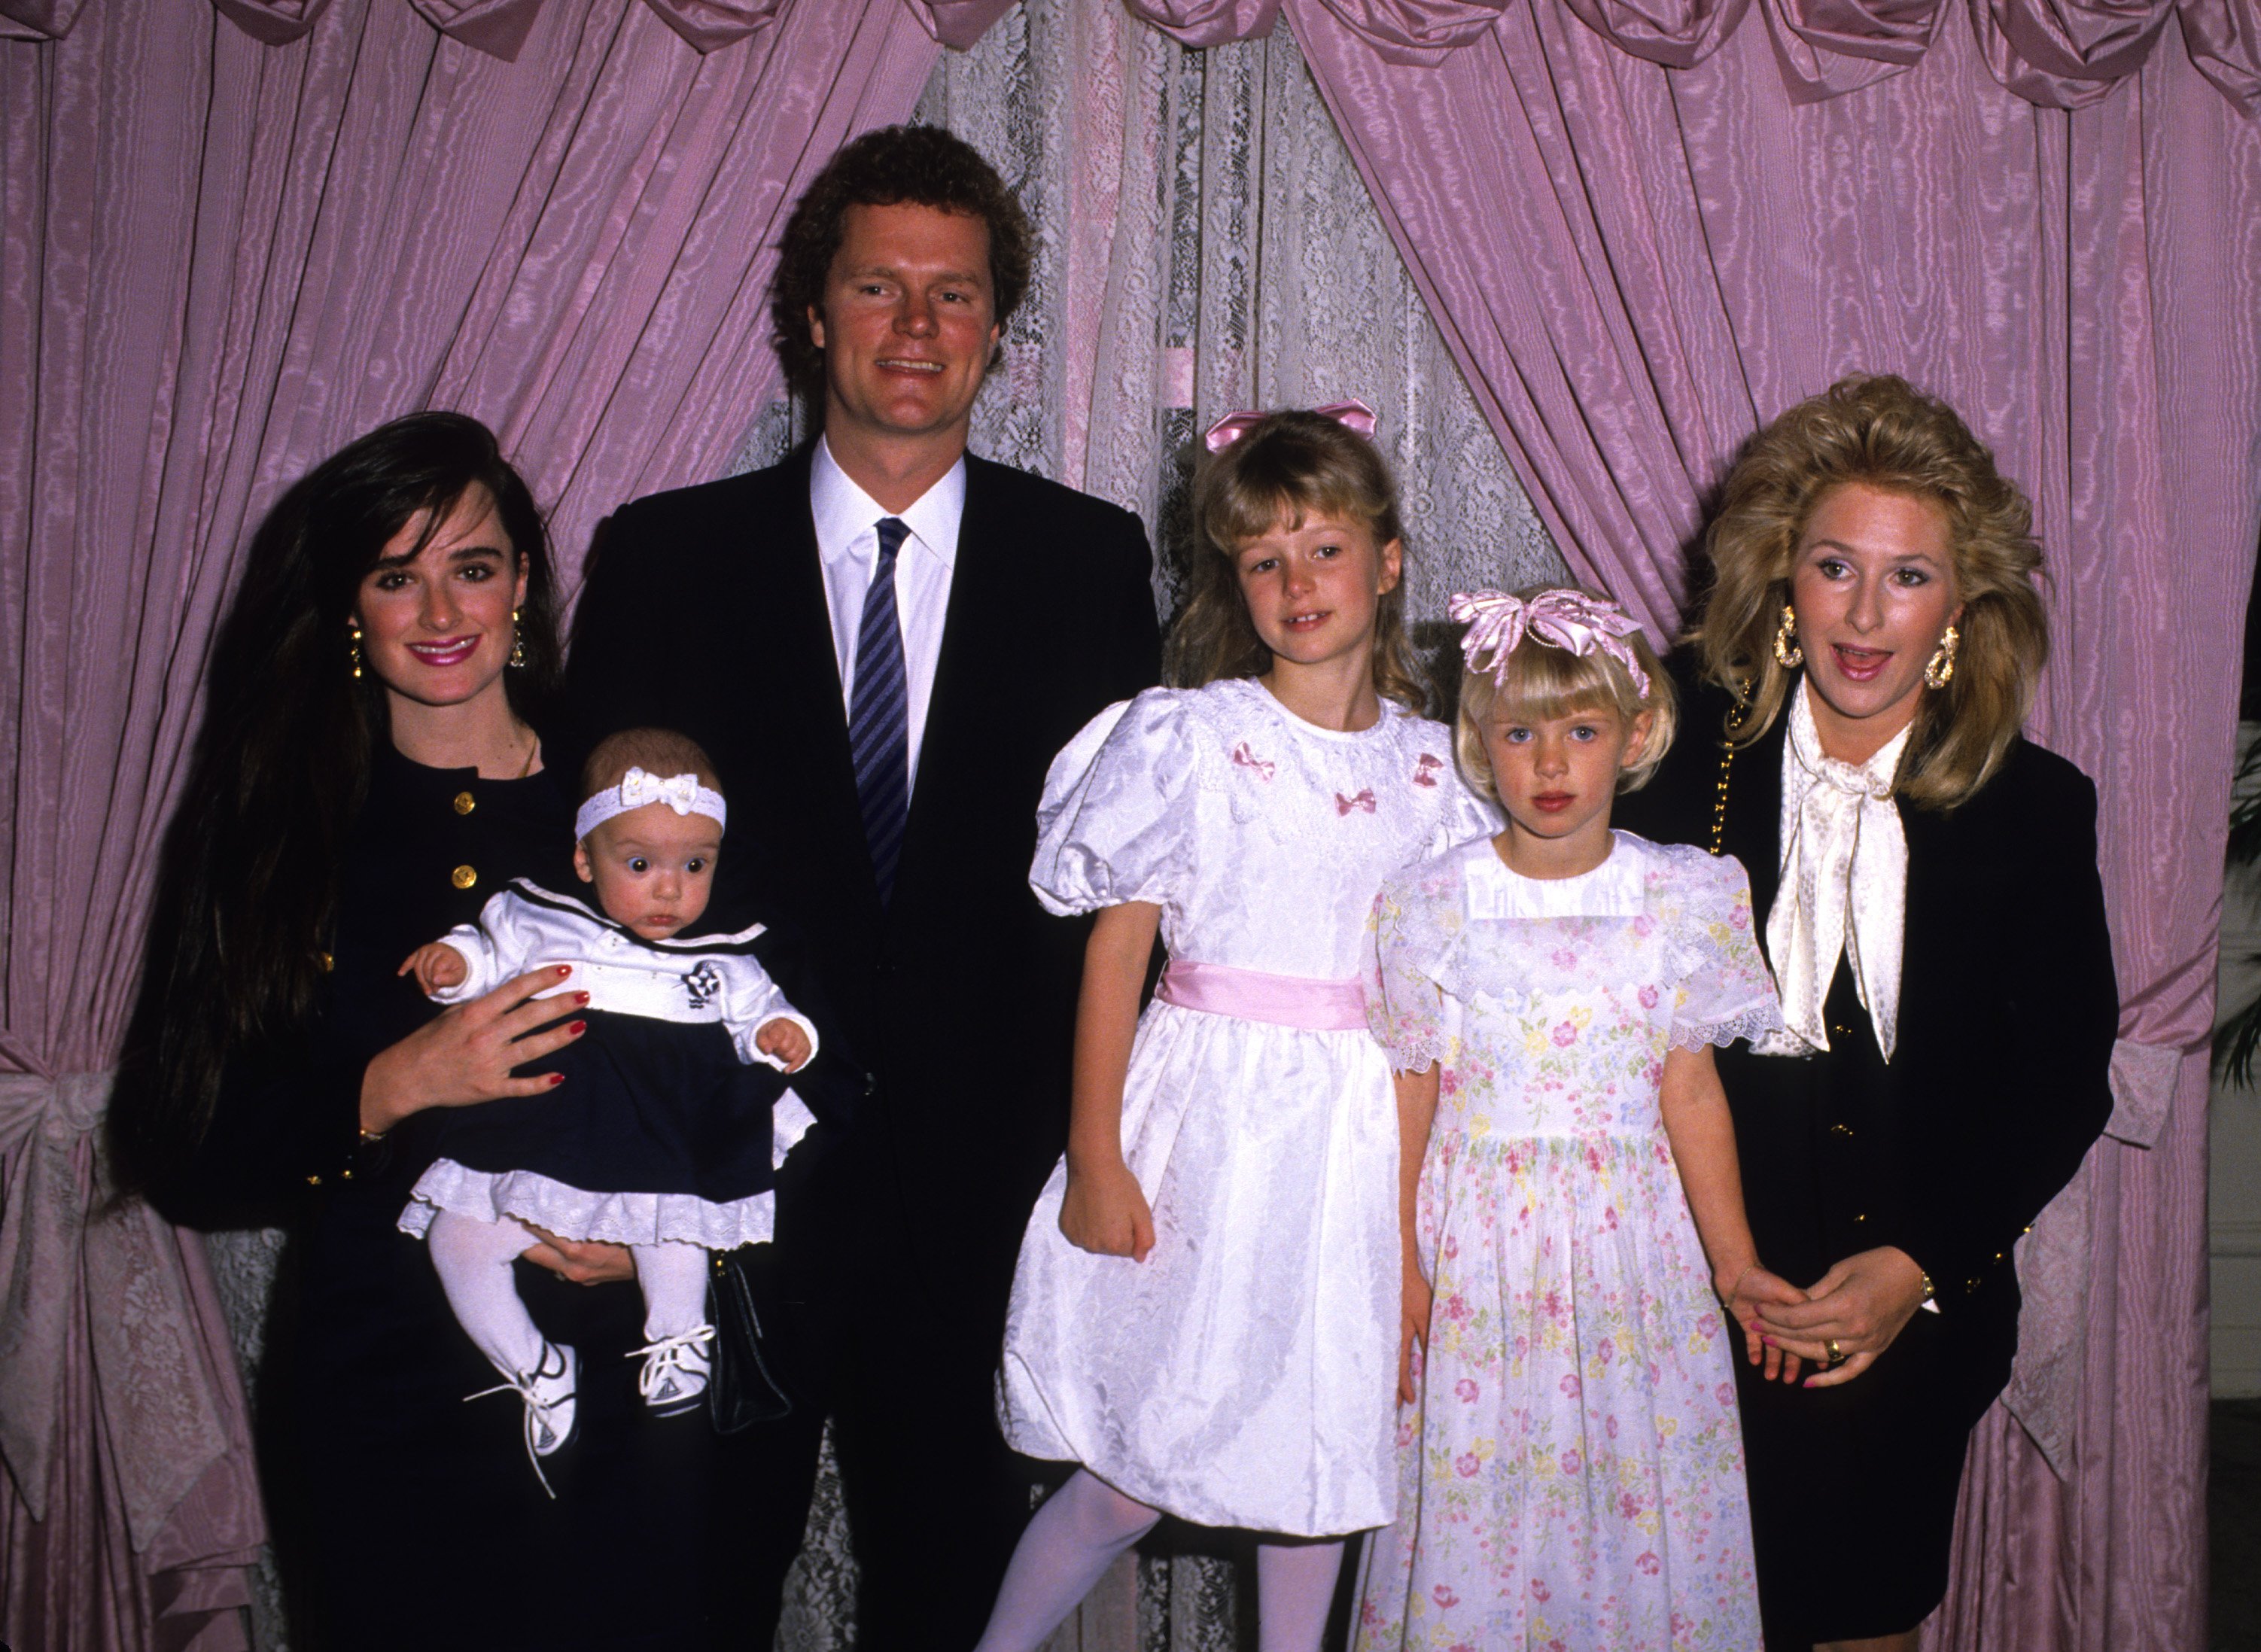 Kyle Richards and daughter Farrah, Rick Hilton, Paris Hilton, Nicky Hilton, and Kathy Hilton. | Source: Getty Images